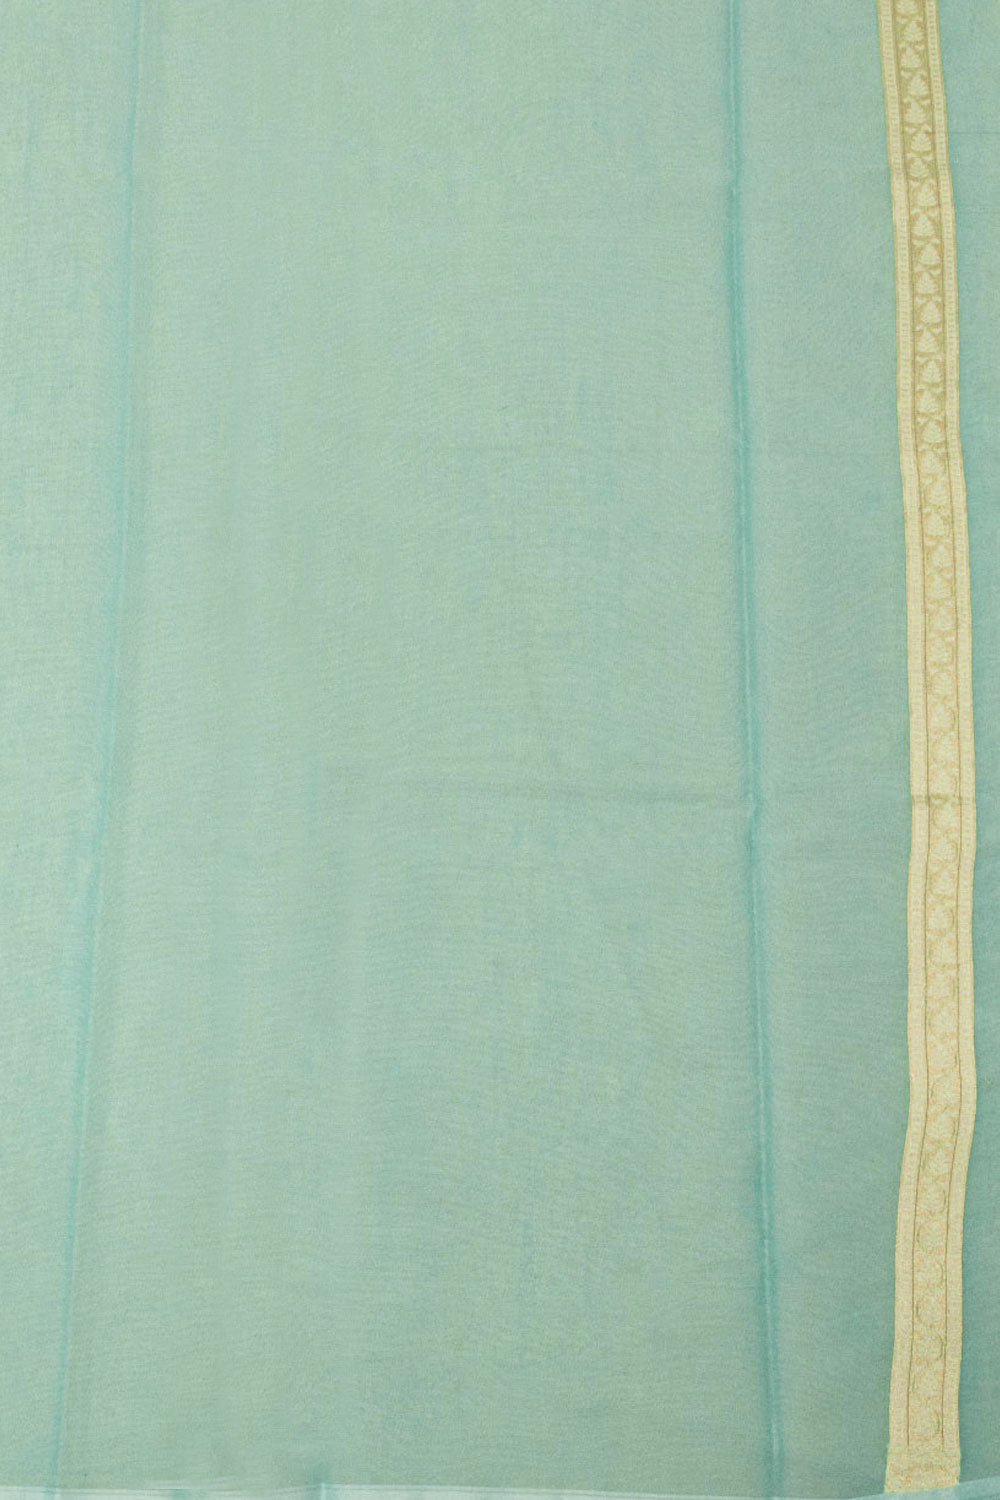 Turquoise Blue Handloom Banarasi Cotton Saree 10065139